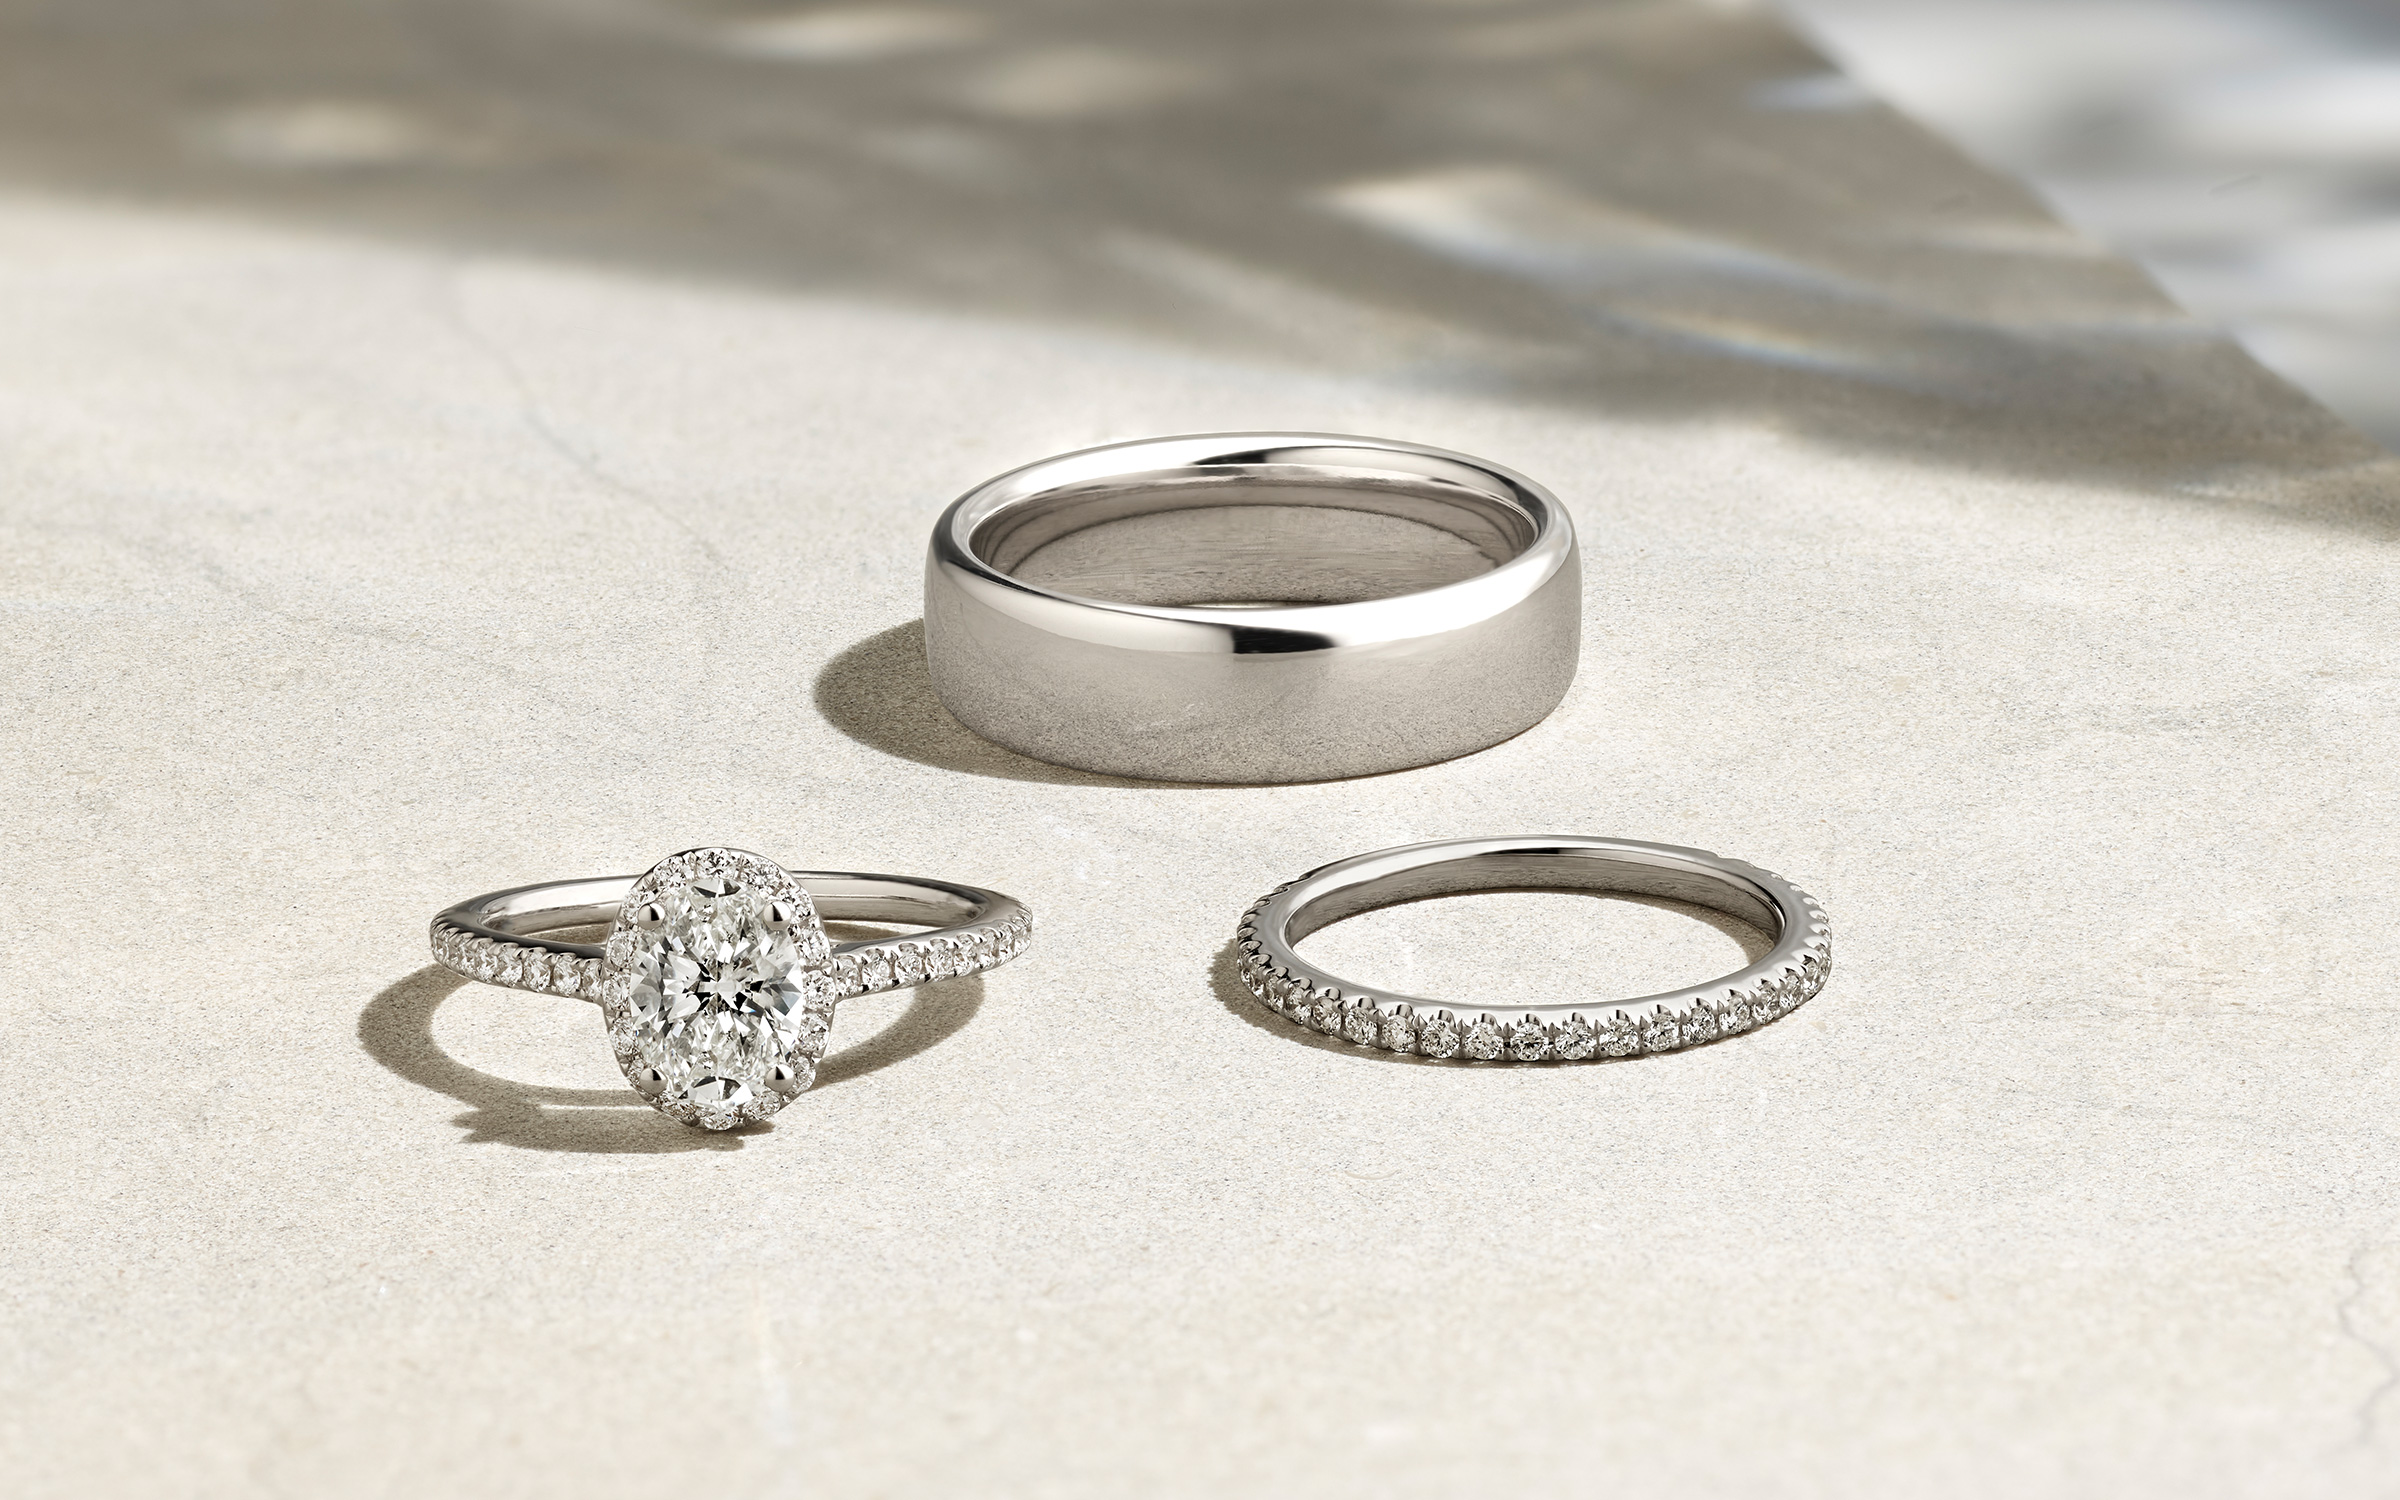 A diamond engagement ring, diamond wedding band, and men's wedding band,